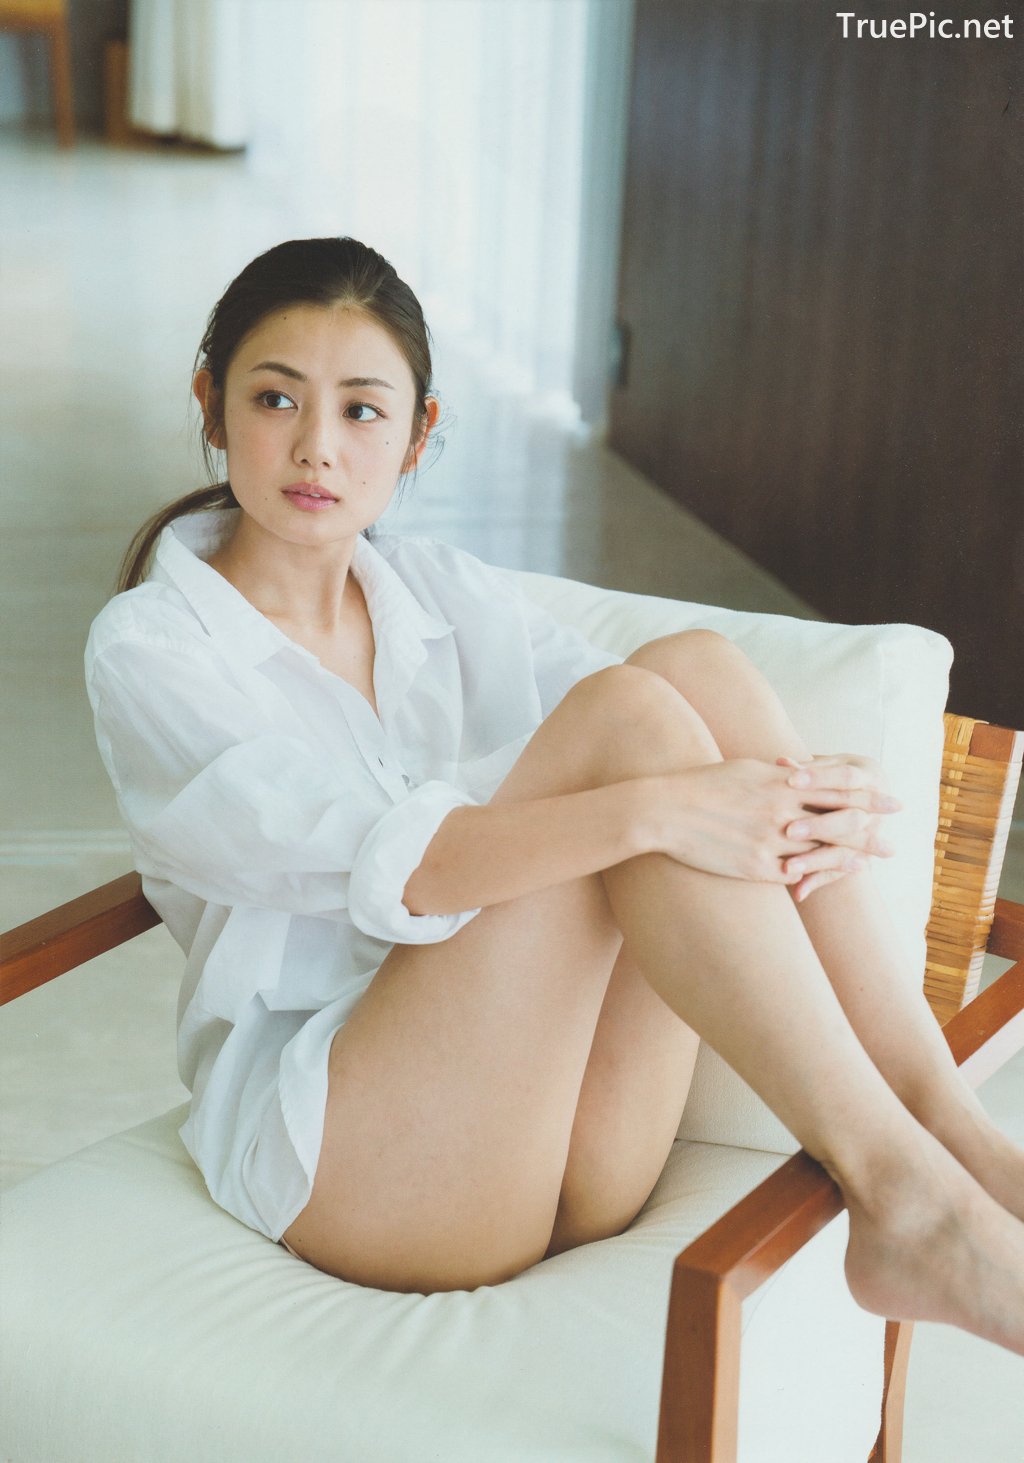 Image-Japanese-Actress-Gravure-Idol-Moemi-Katayama-Mermaid-From-Tokyo-Japan-TruePic.net- Picture-18